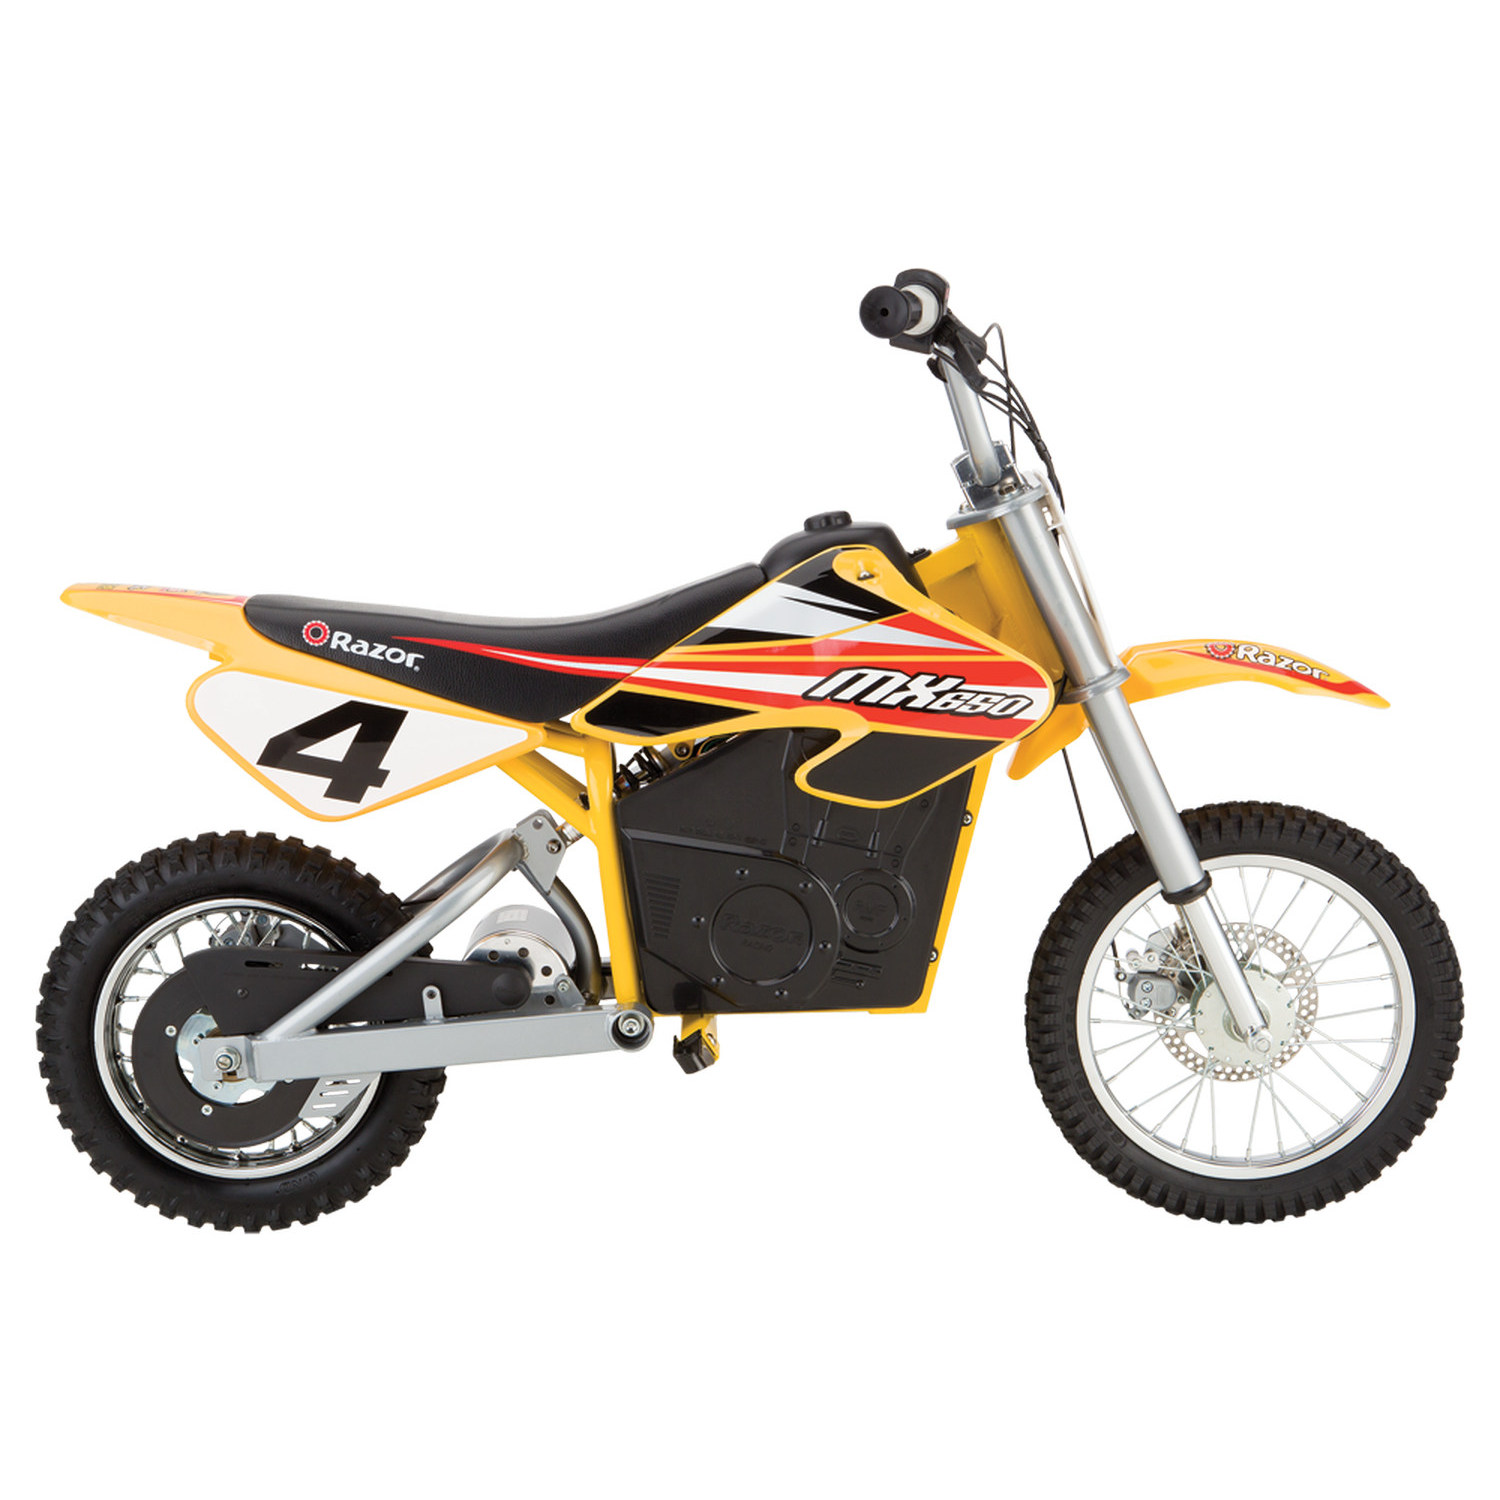 Электромотоцикл для детей RAZOR MX650 жёлтый с амортизаторами для бездорожья - фото 11